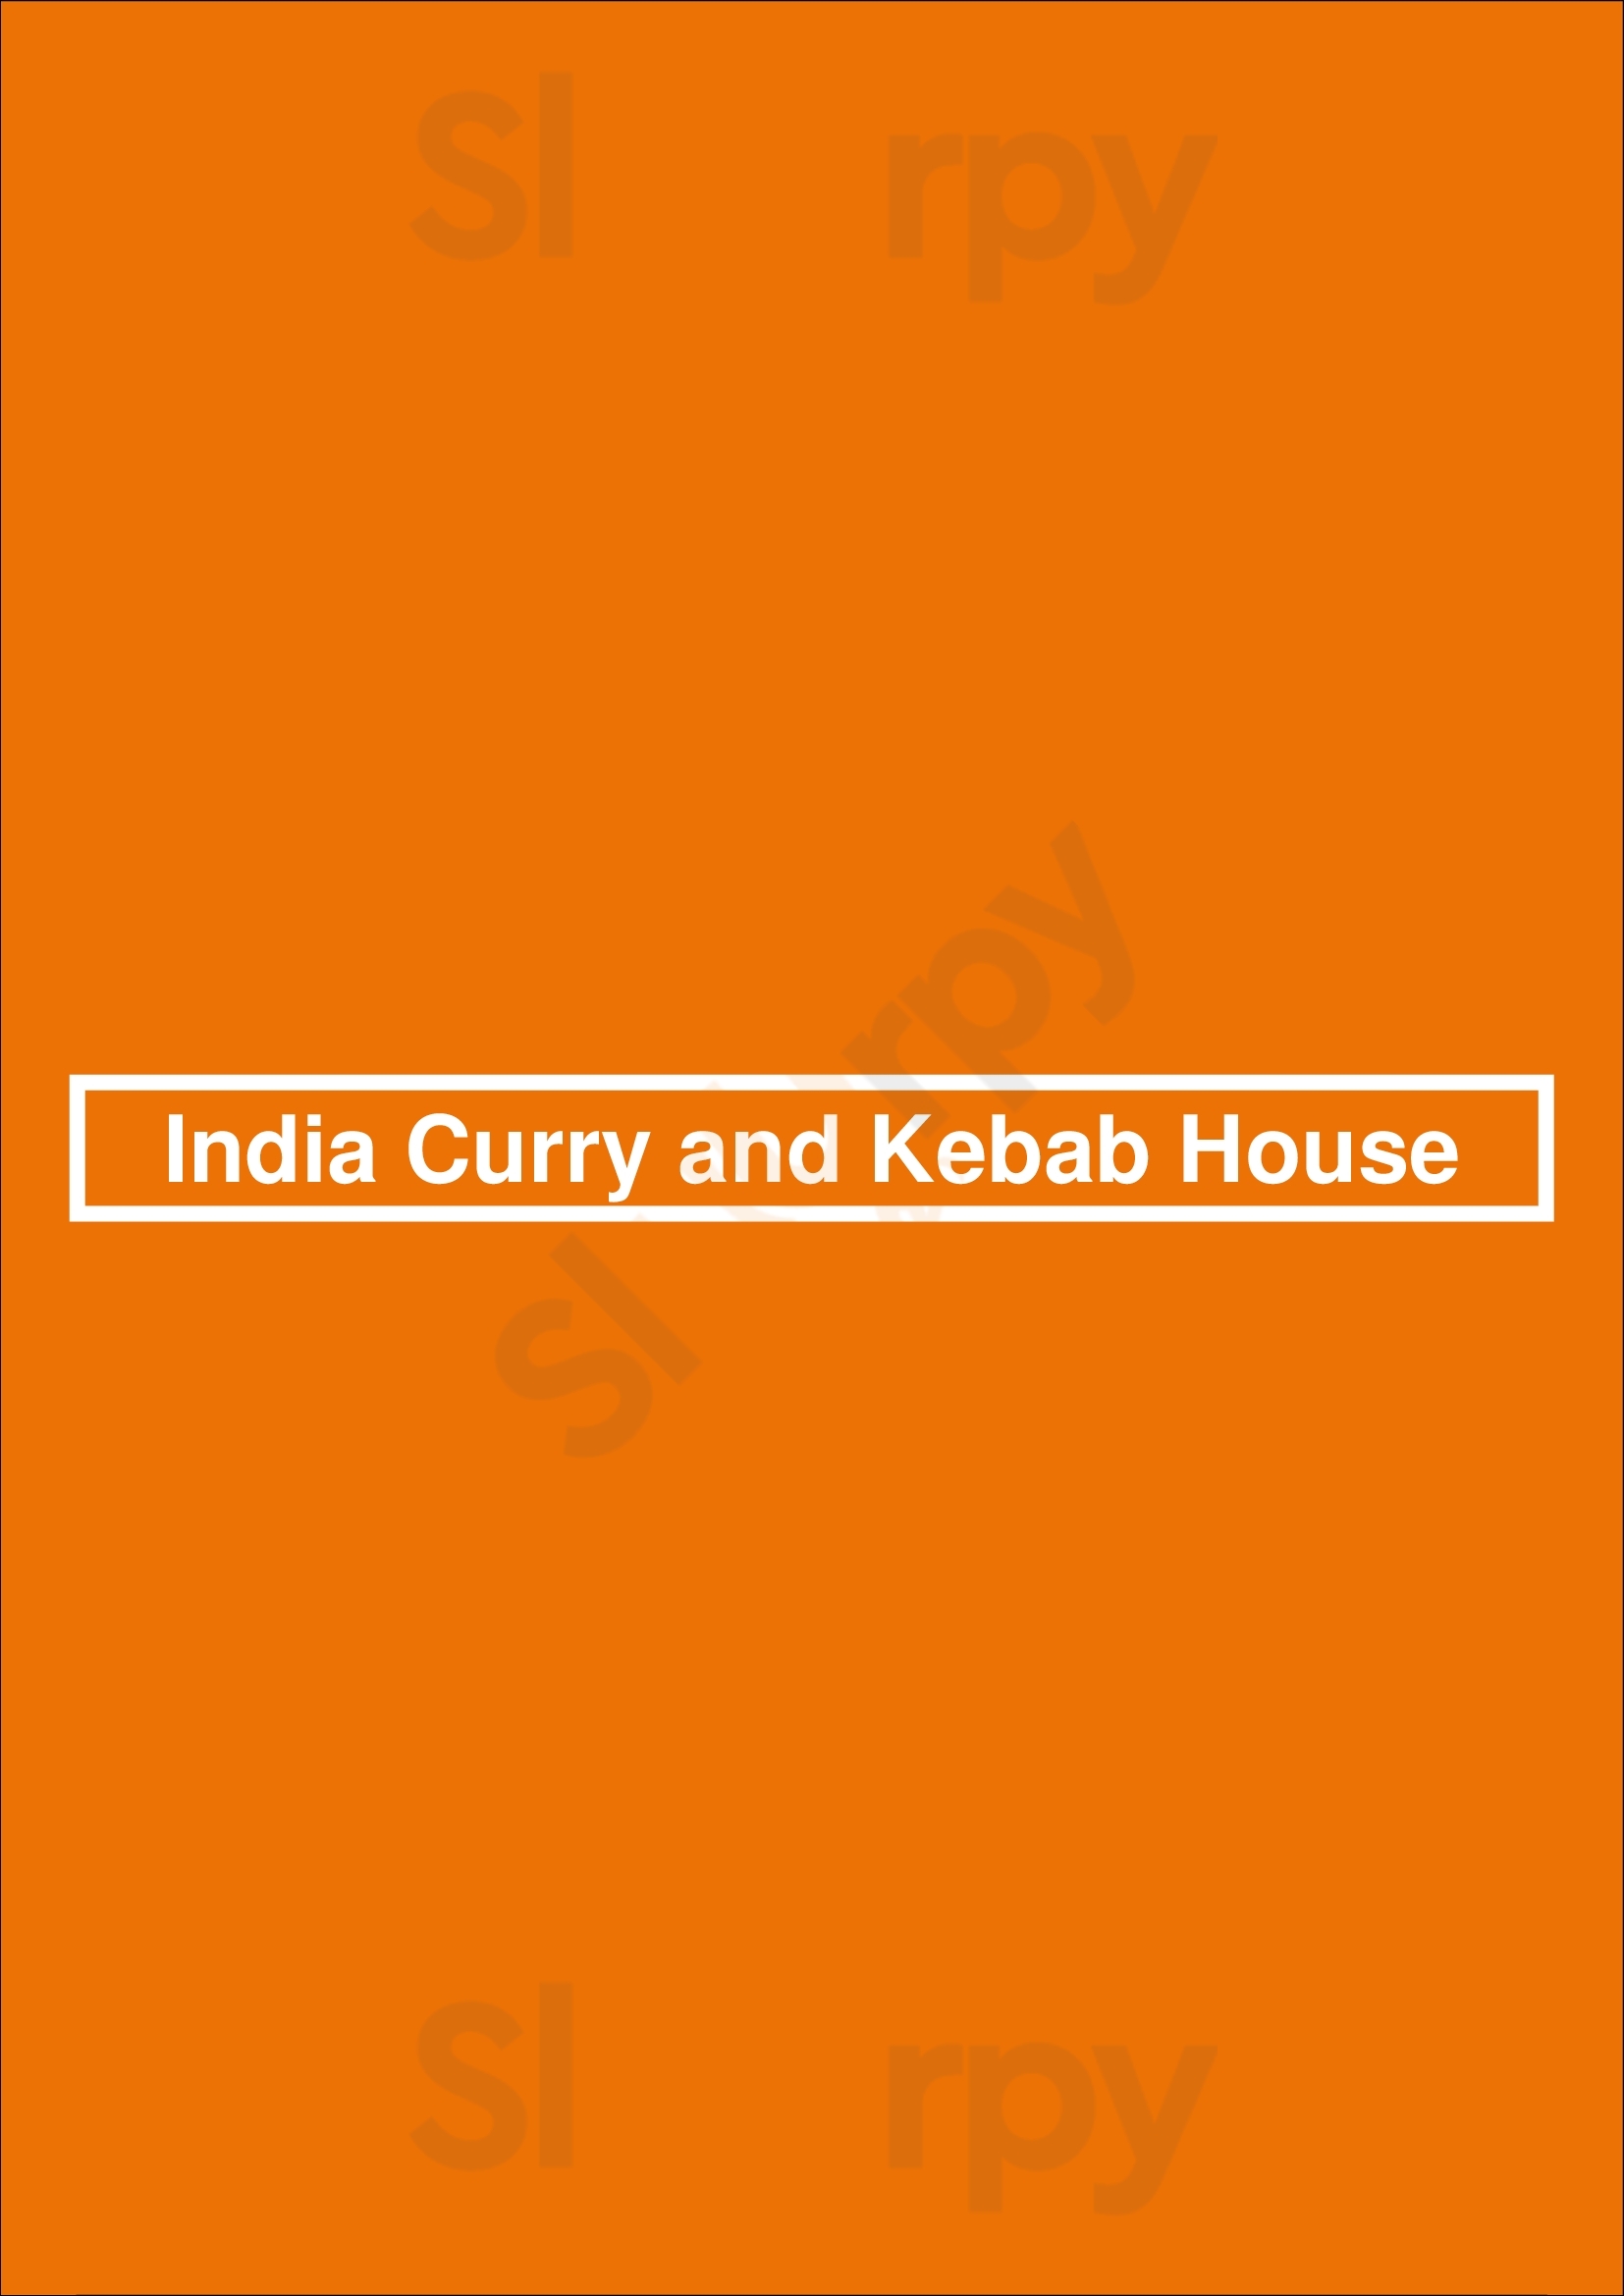 India Curry And Kebab House Ottawa Menu - 1